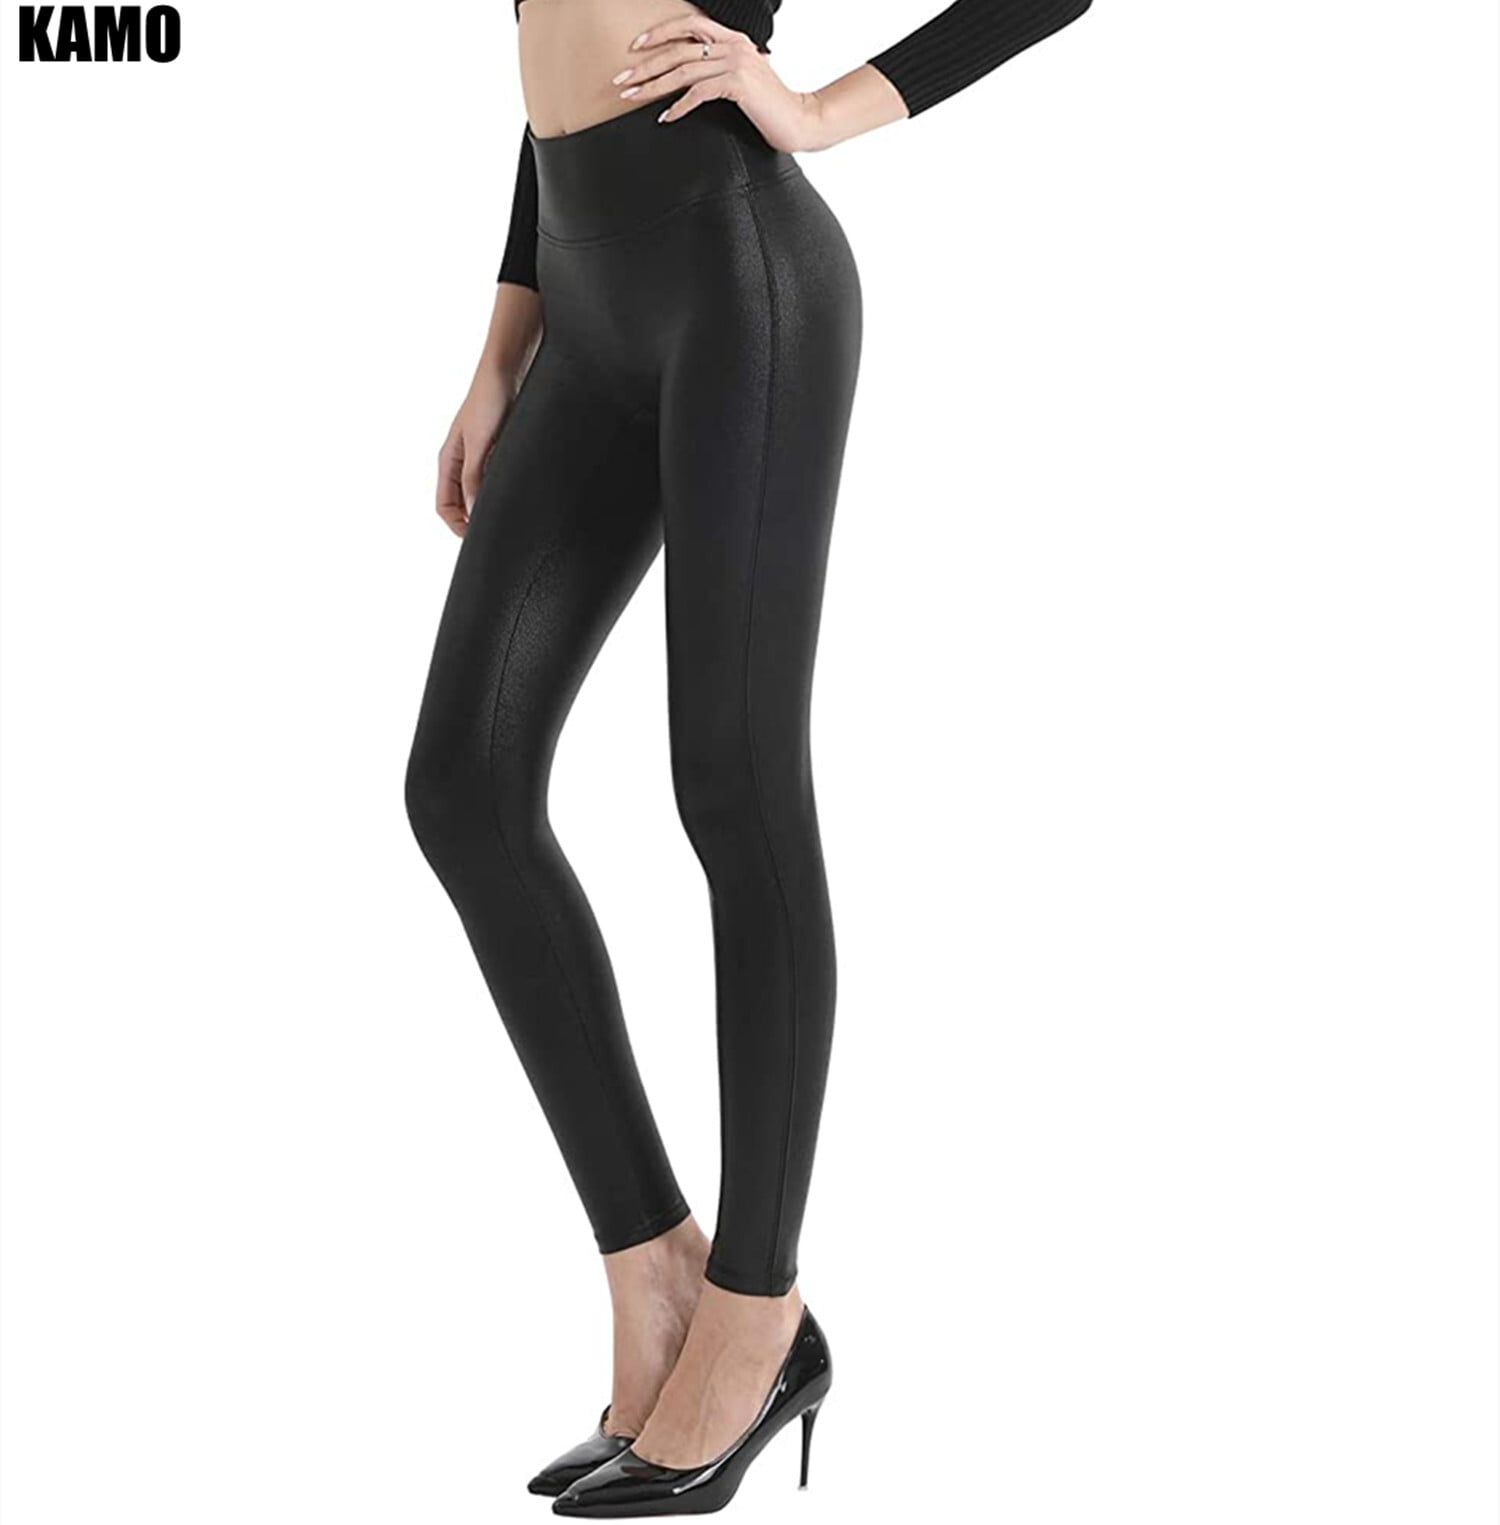 KAMO Women'Plus Size Black Faux Leather Cropped Pants Leather Leggings 